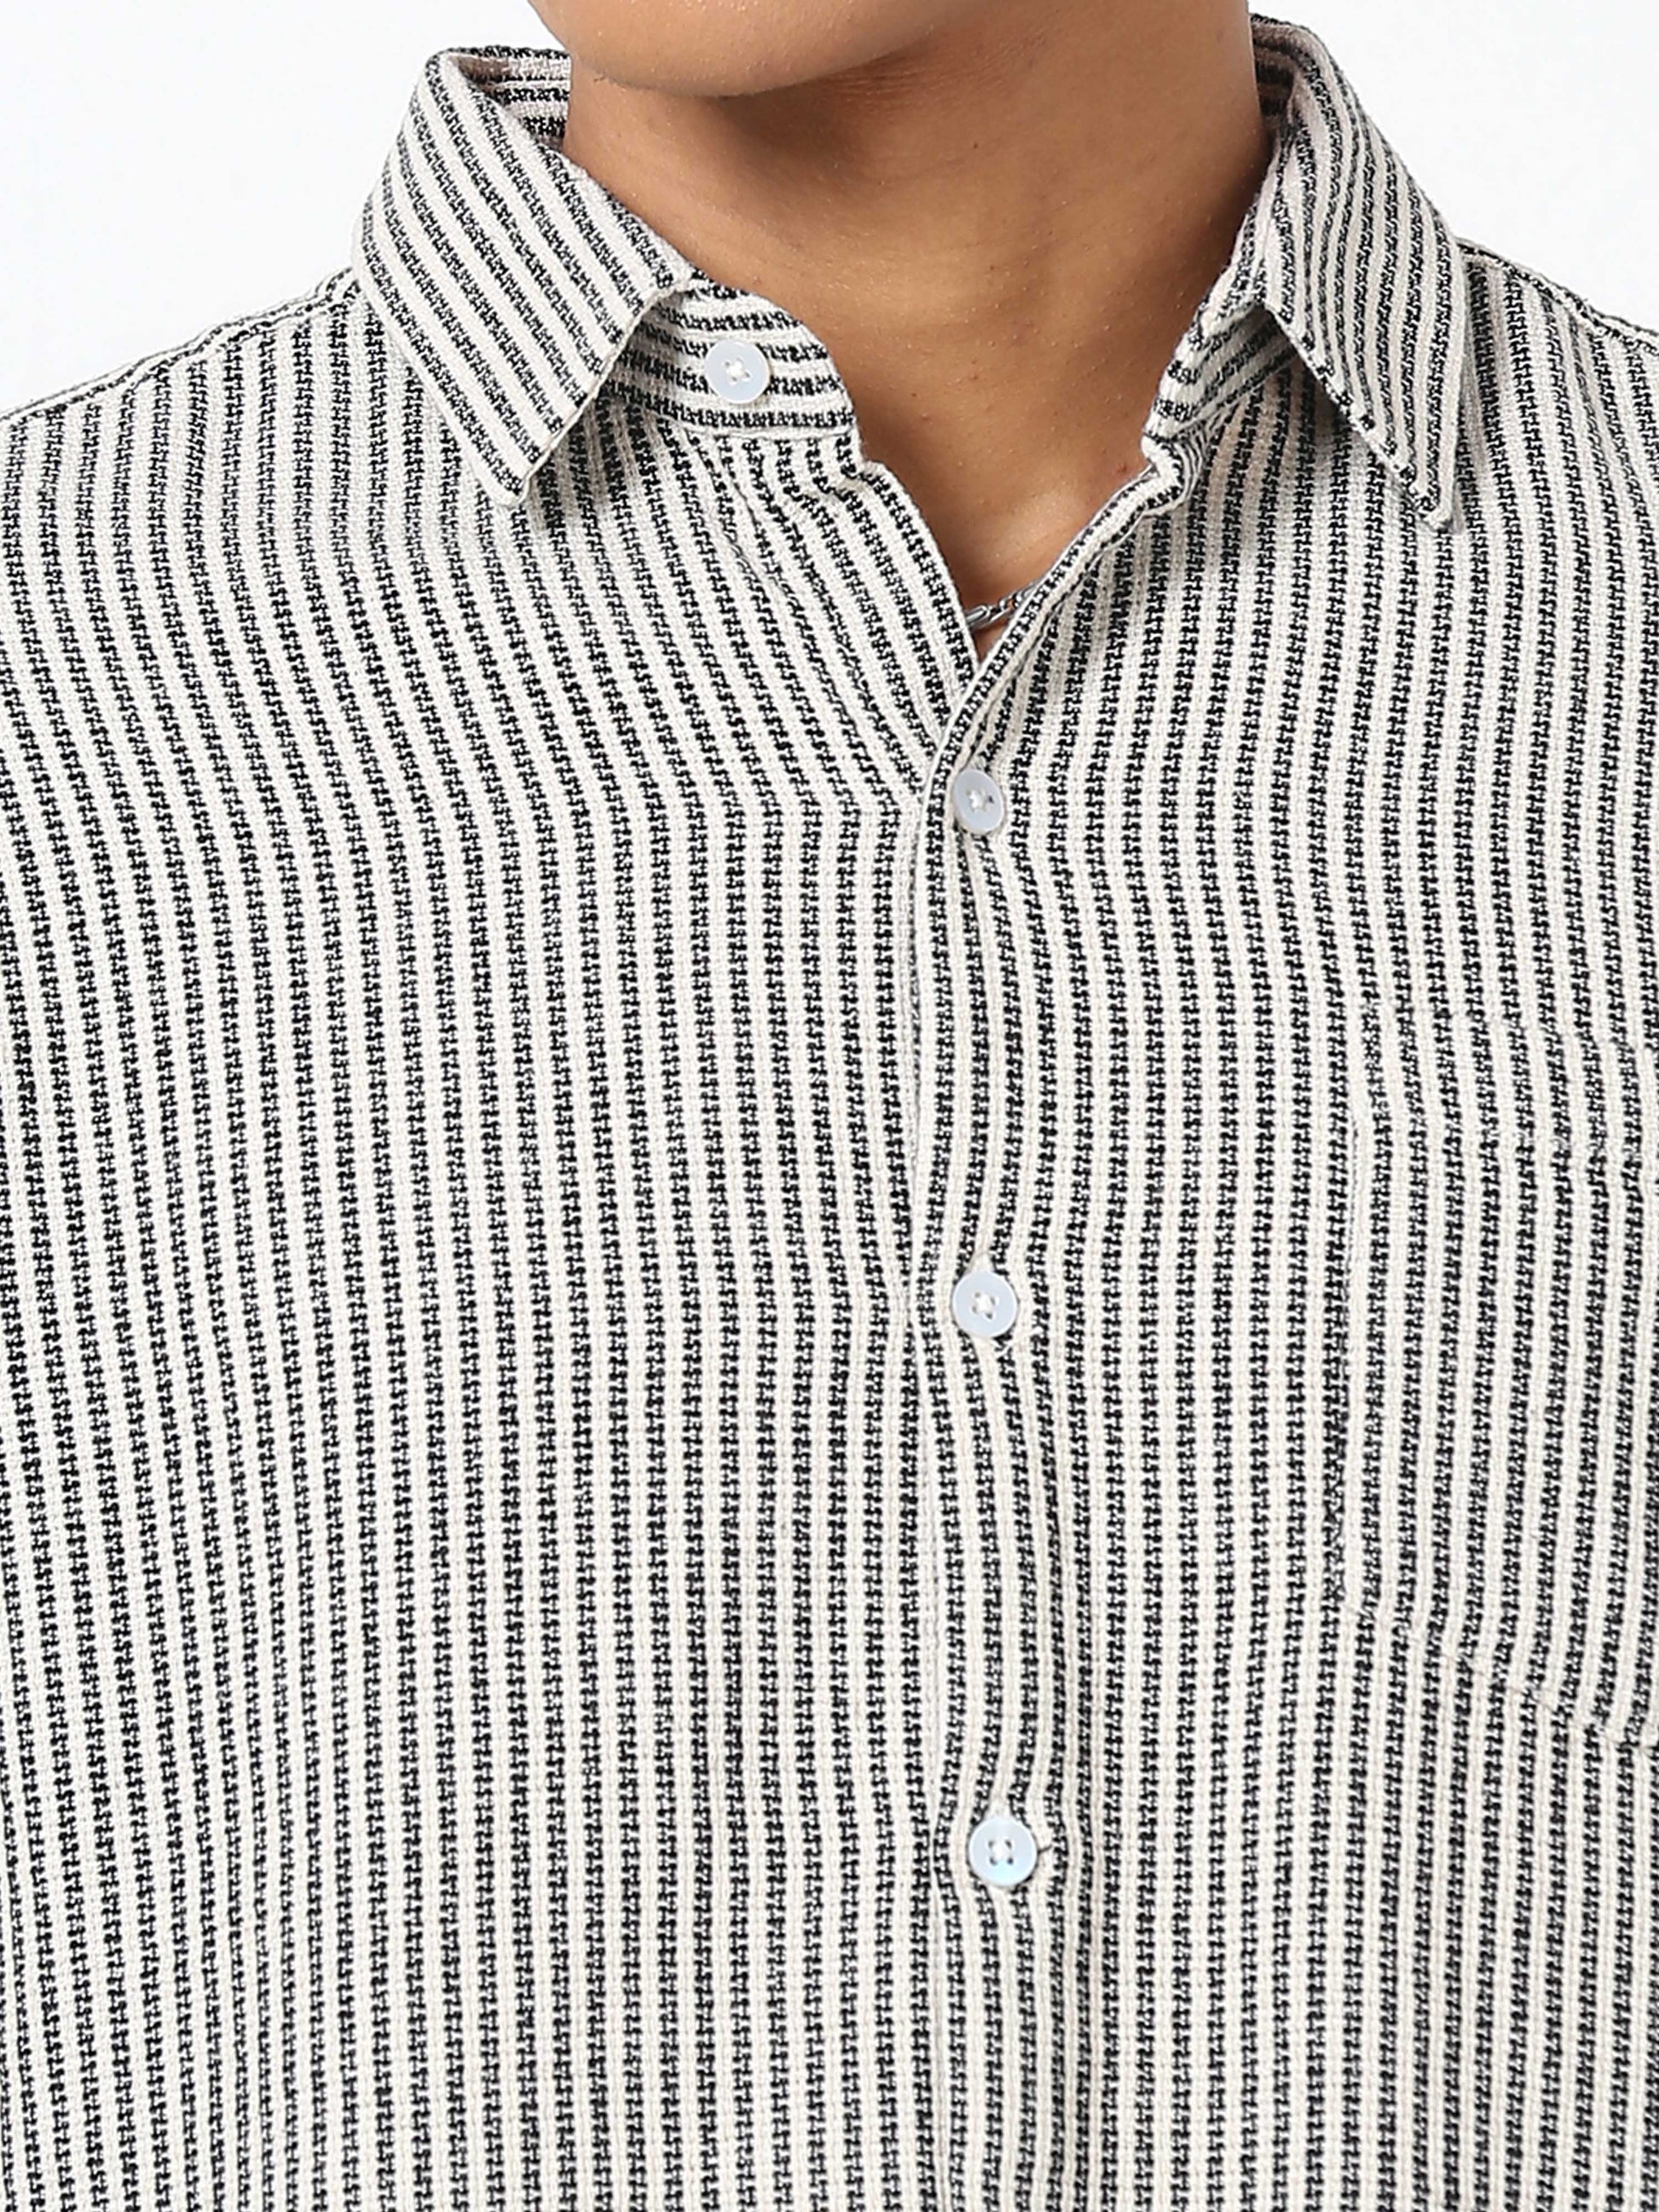 Black and White half sleeve striped shirt